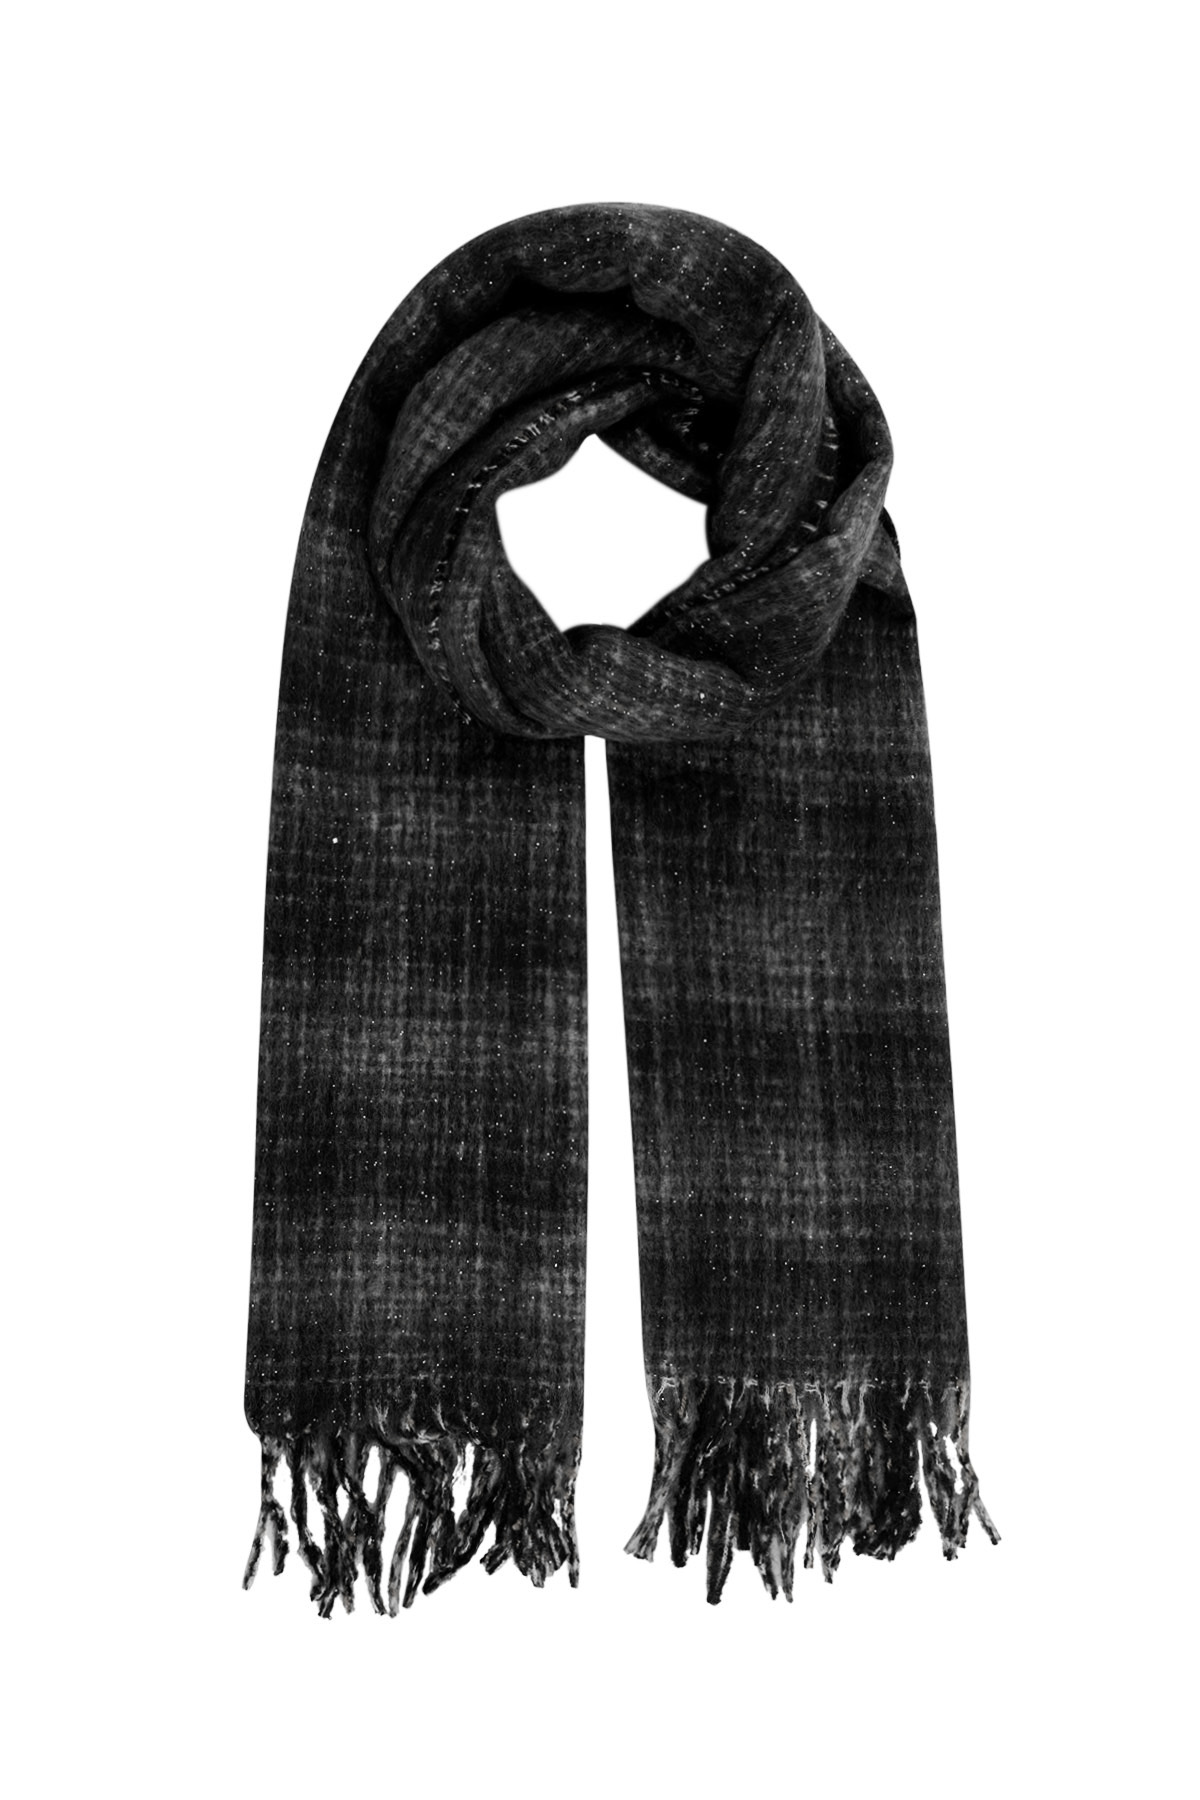 Checked warm winter scarf - black